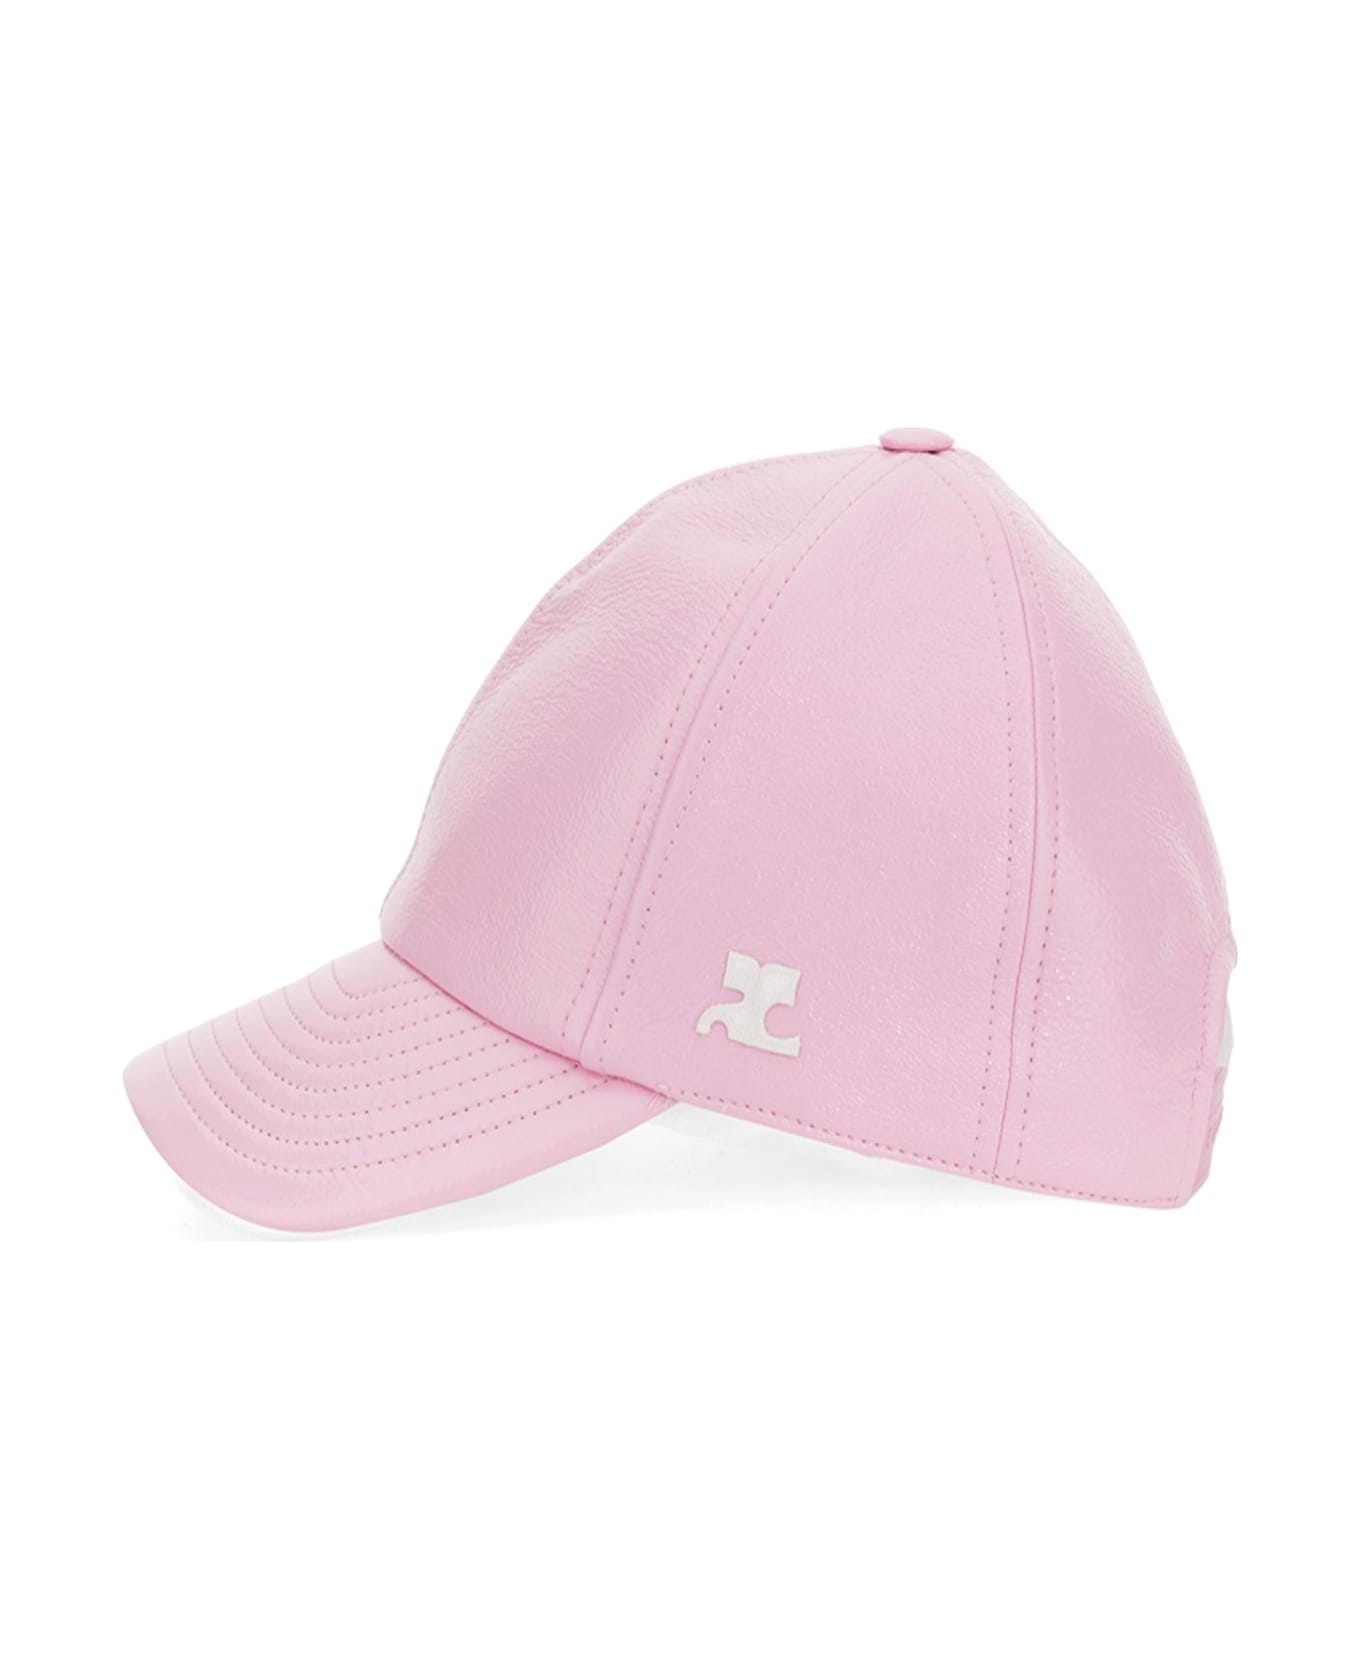 Courrèges Baseball Cap - Pink